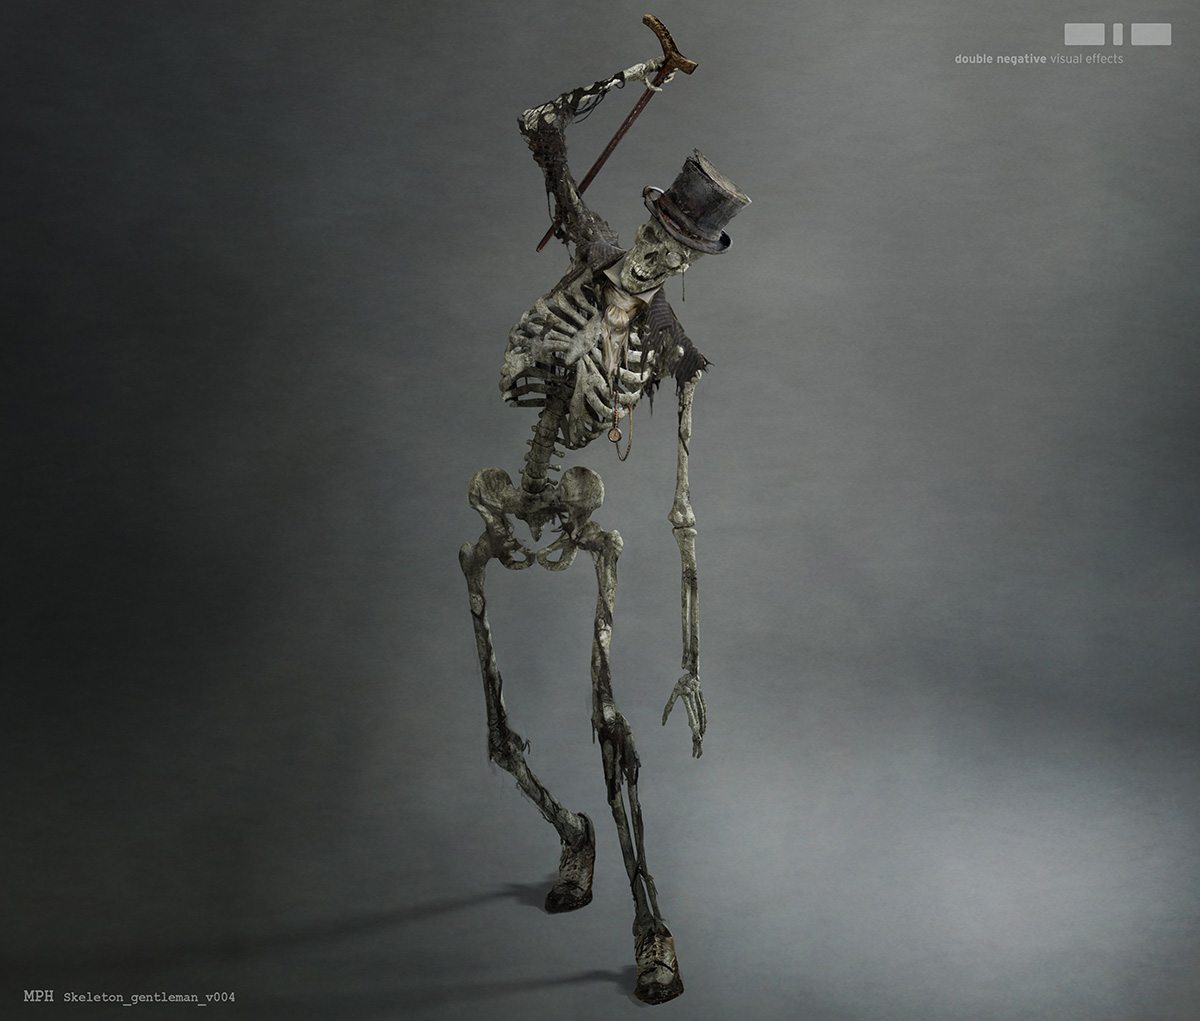 Double Negative's skeleton design for the 'gentleman.'